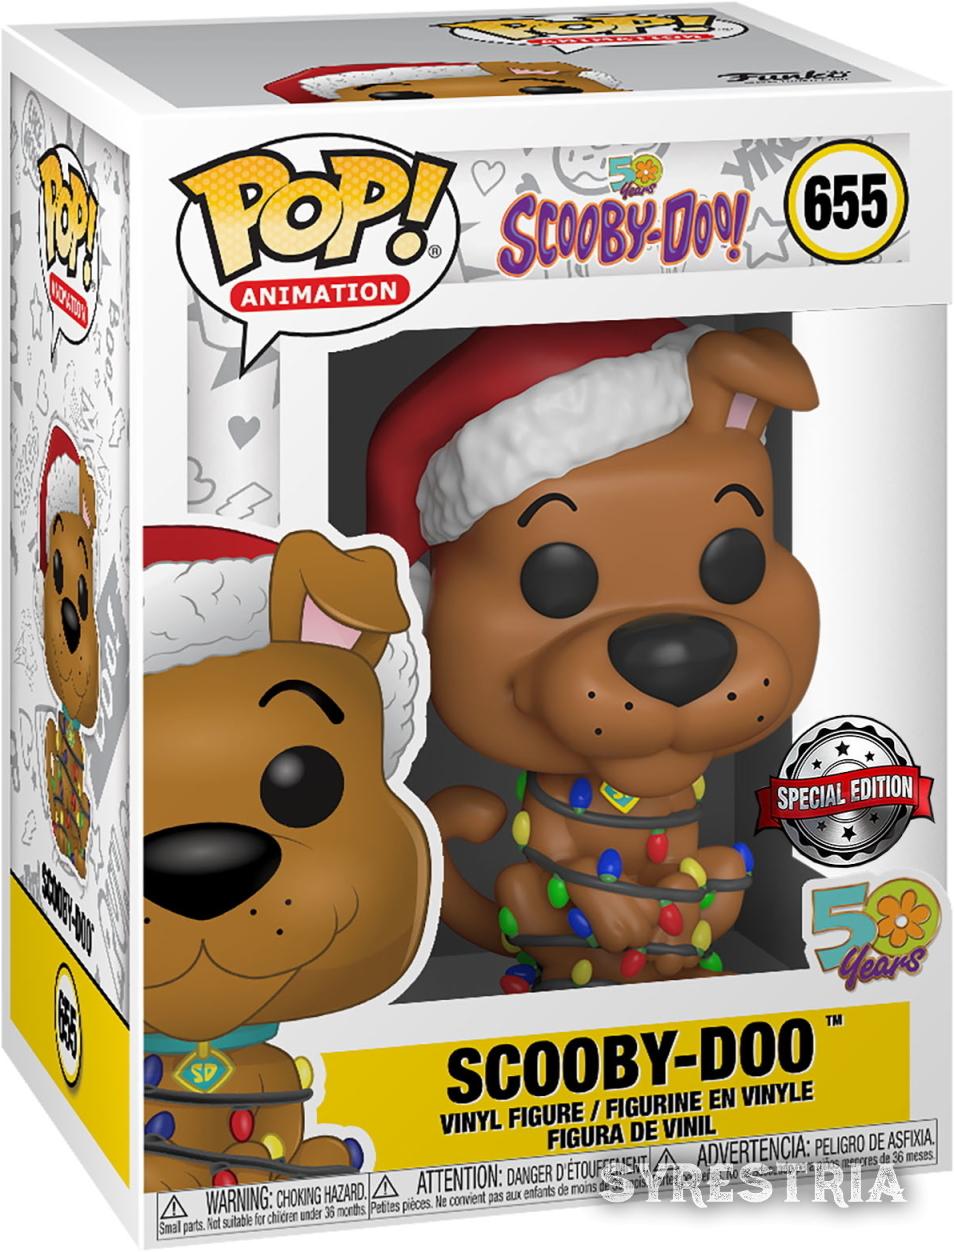 Scooby Doo 50th - Scooby Doo Holiday 655 Special Edition - Funko Pop! - Vinyl Figur